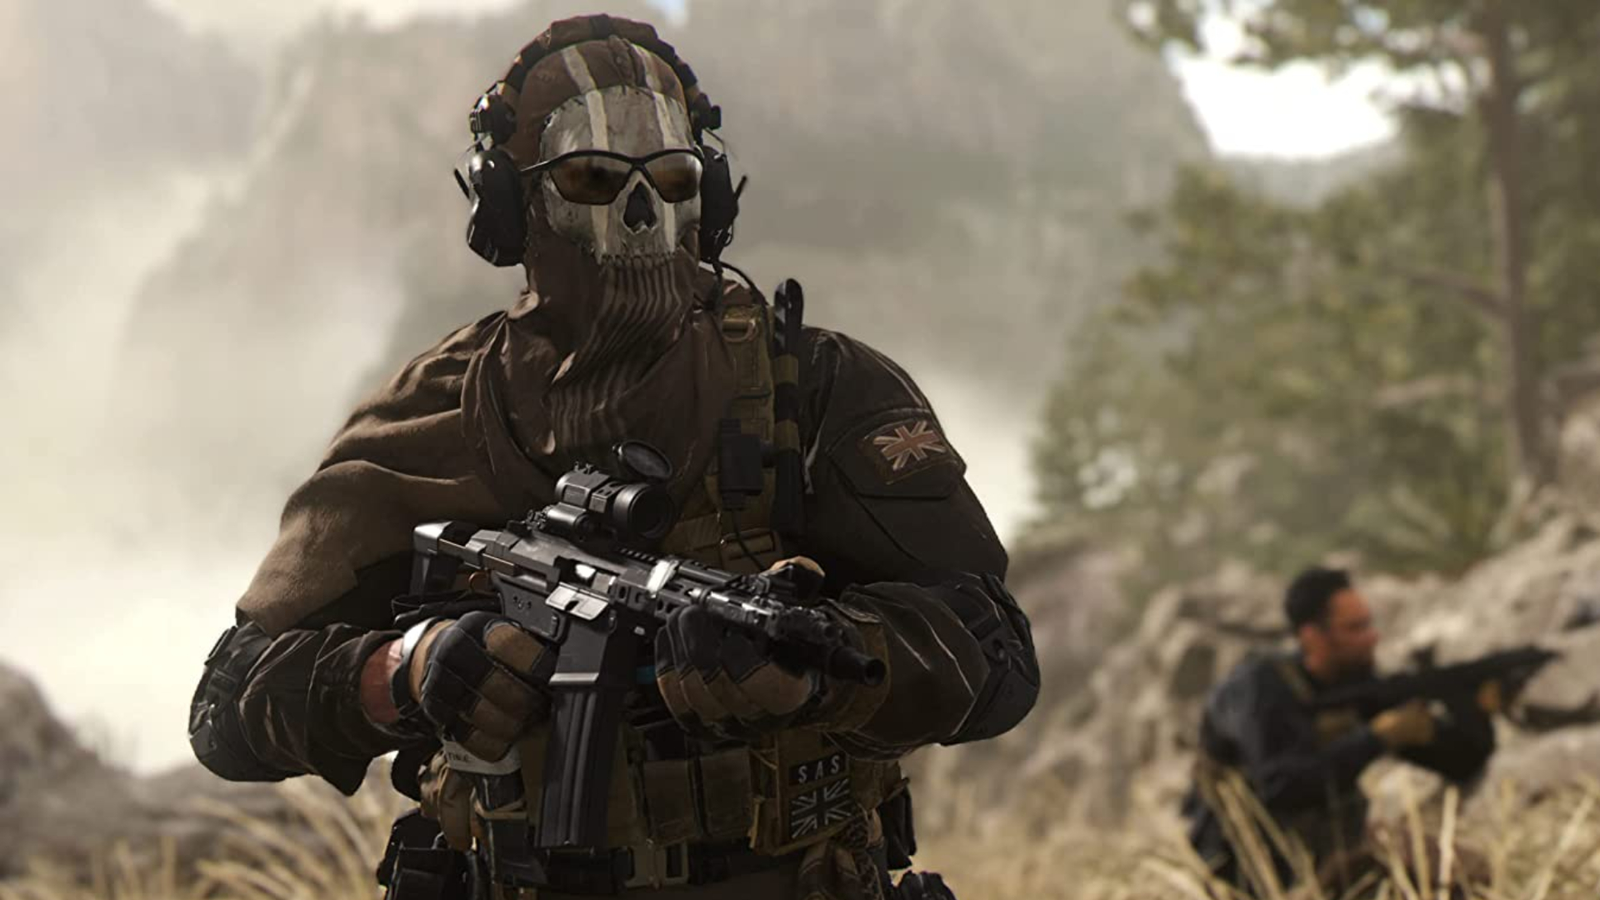 KontrolFreek unveil their new Call of Duty Vanguard Performance